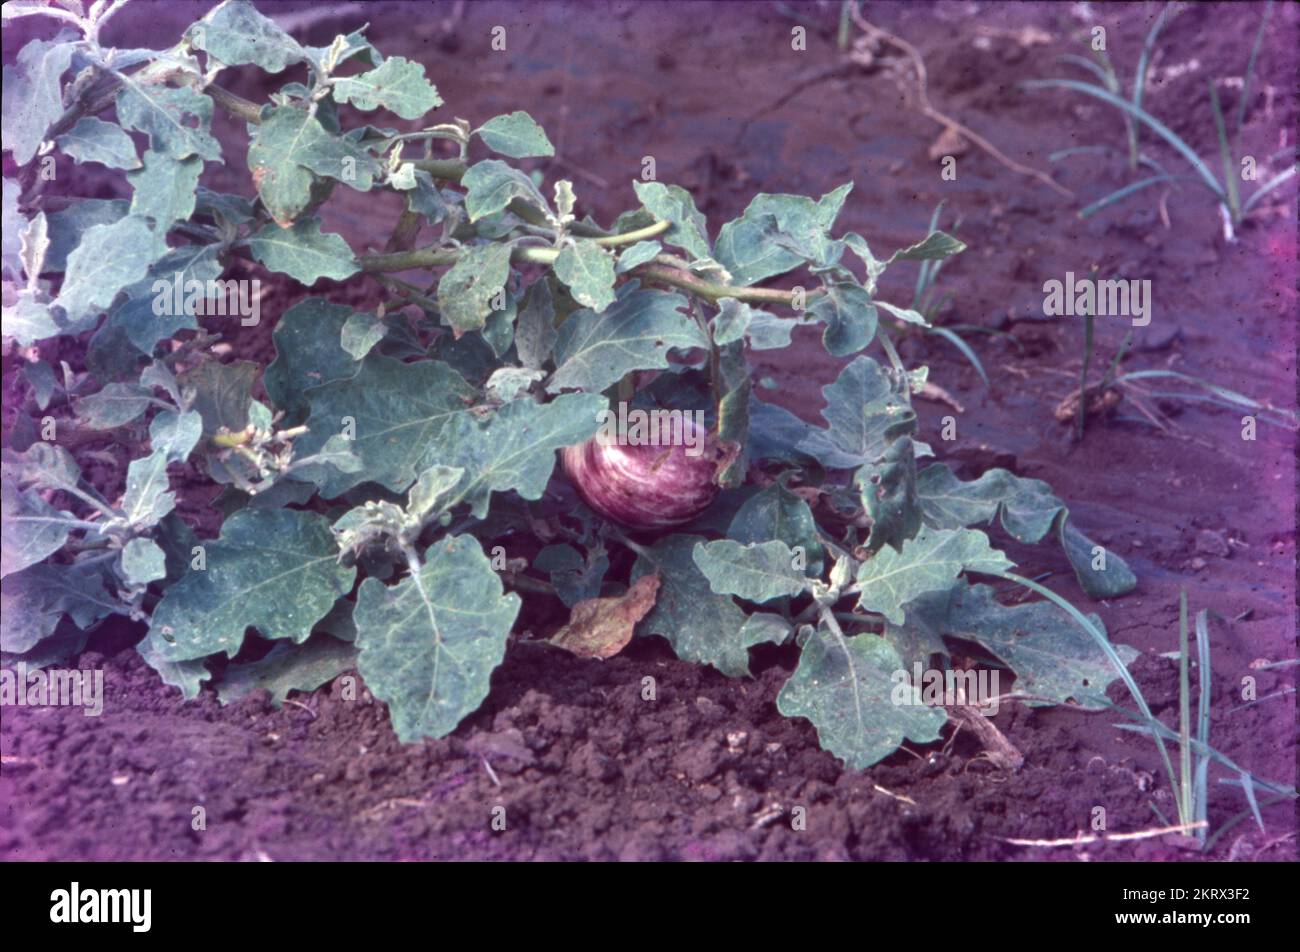 Botanical family solanaceae hi-res stock photography and images - Alamy